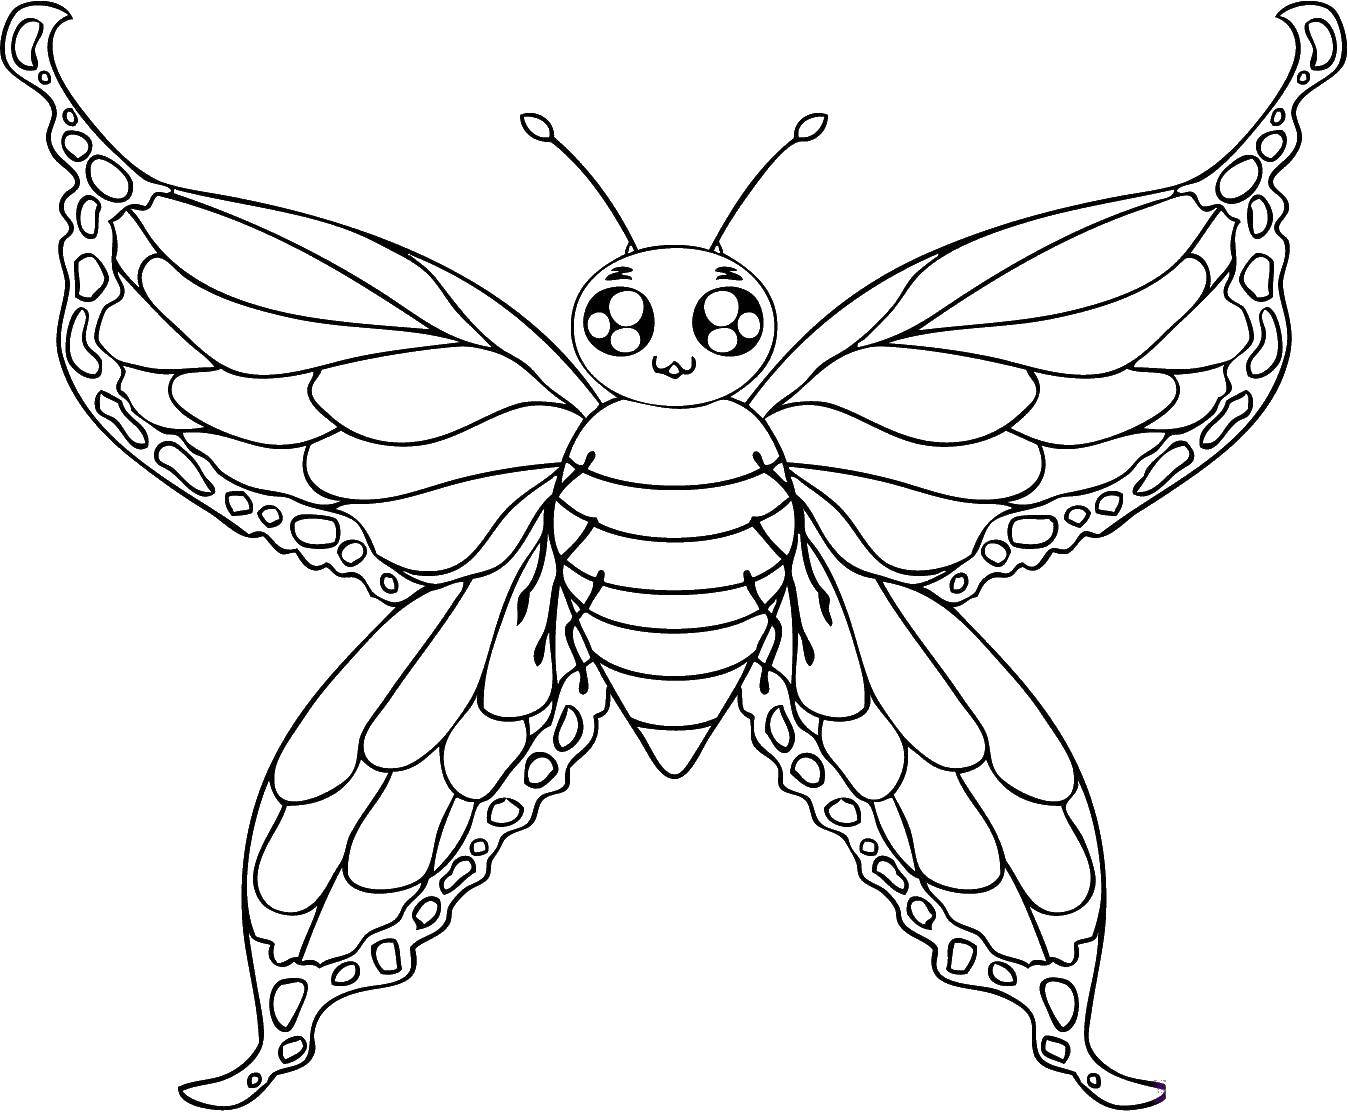 Название: Раскраска Милая бабочка. Категория: Бабочка. Теги: насекомые, бабочки, крылышки.